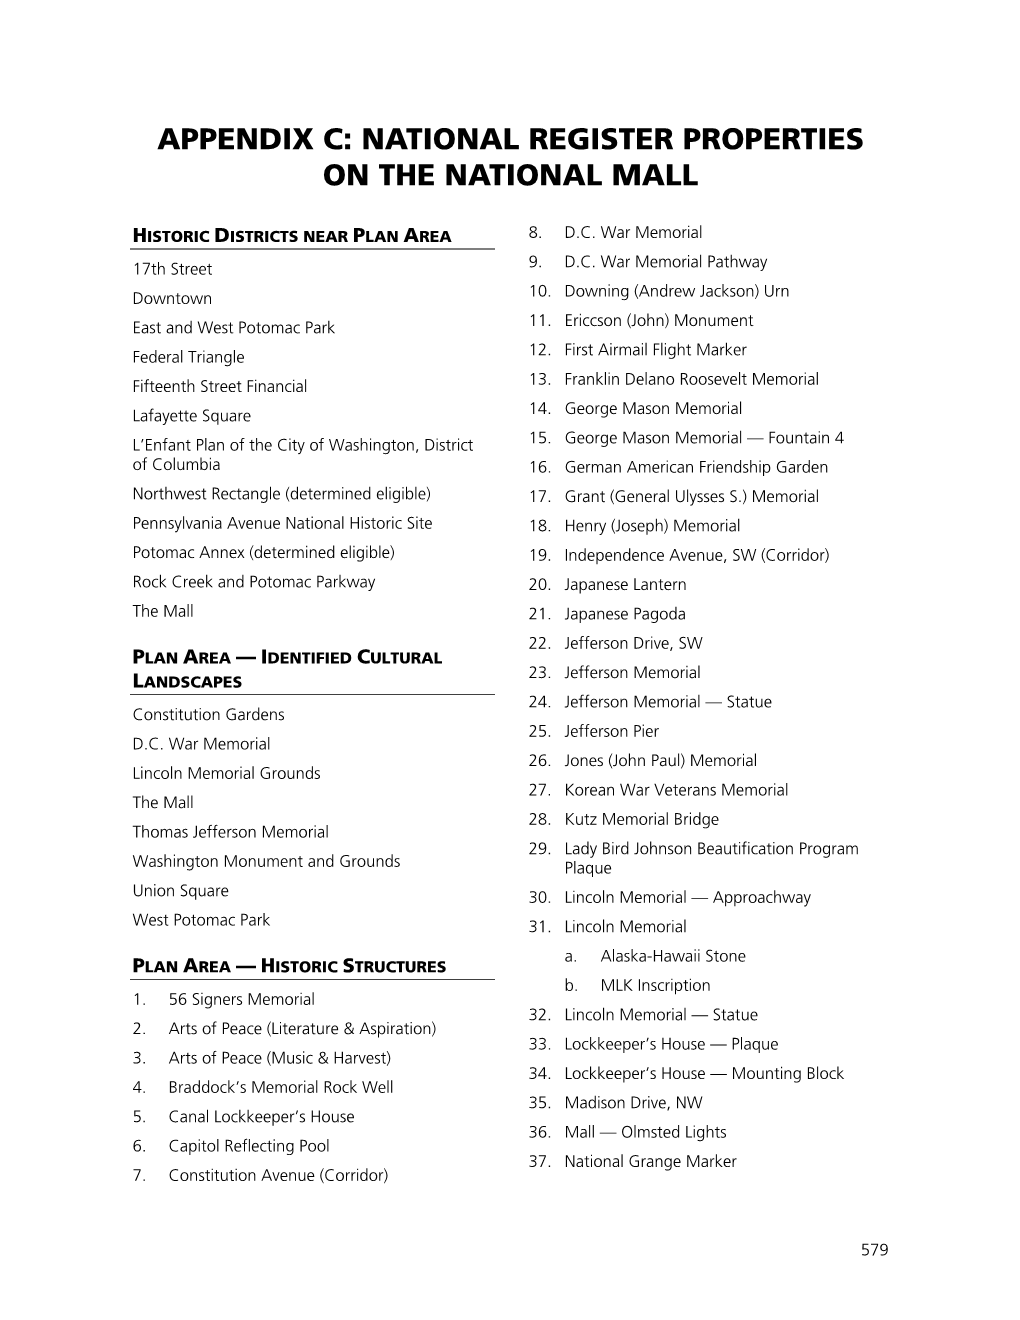 Final National Mall Plan/EIS, Volume 1, Appendix C